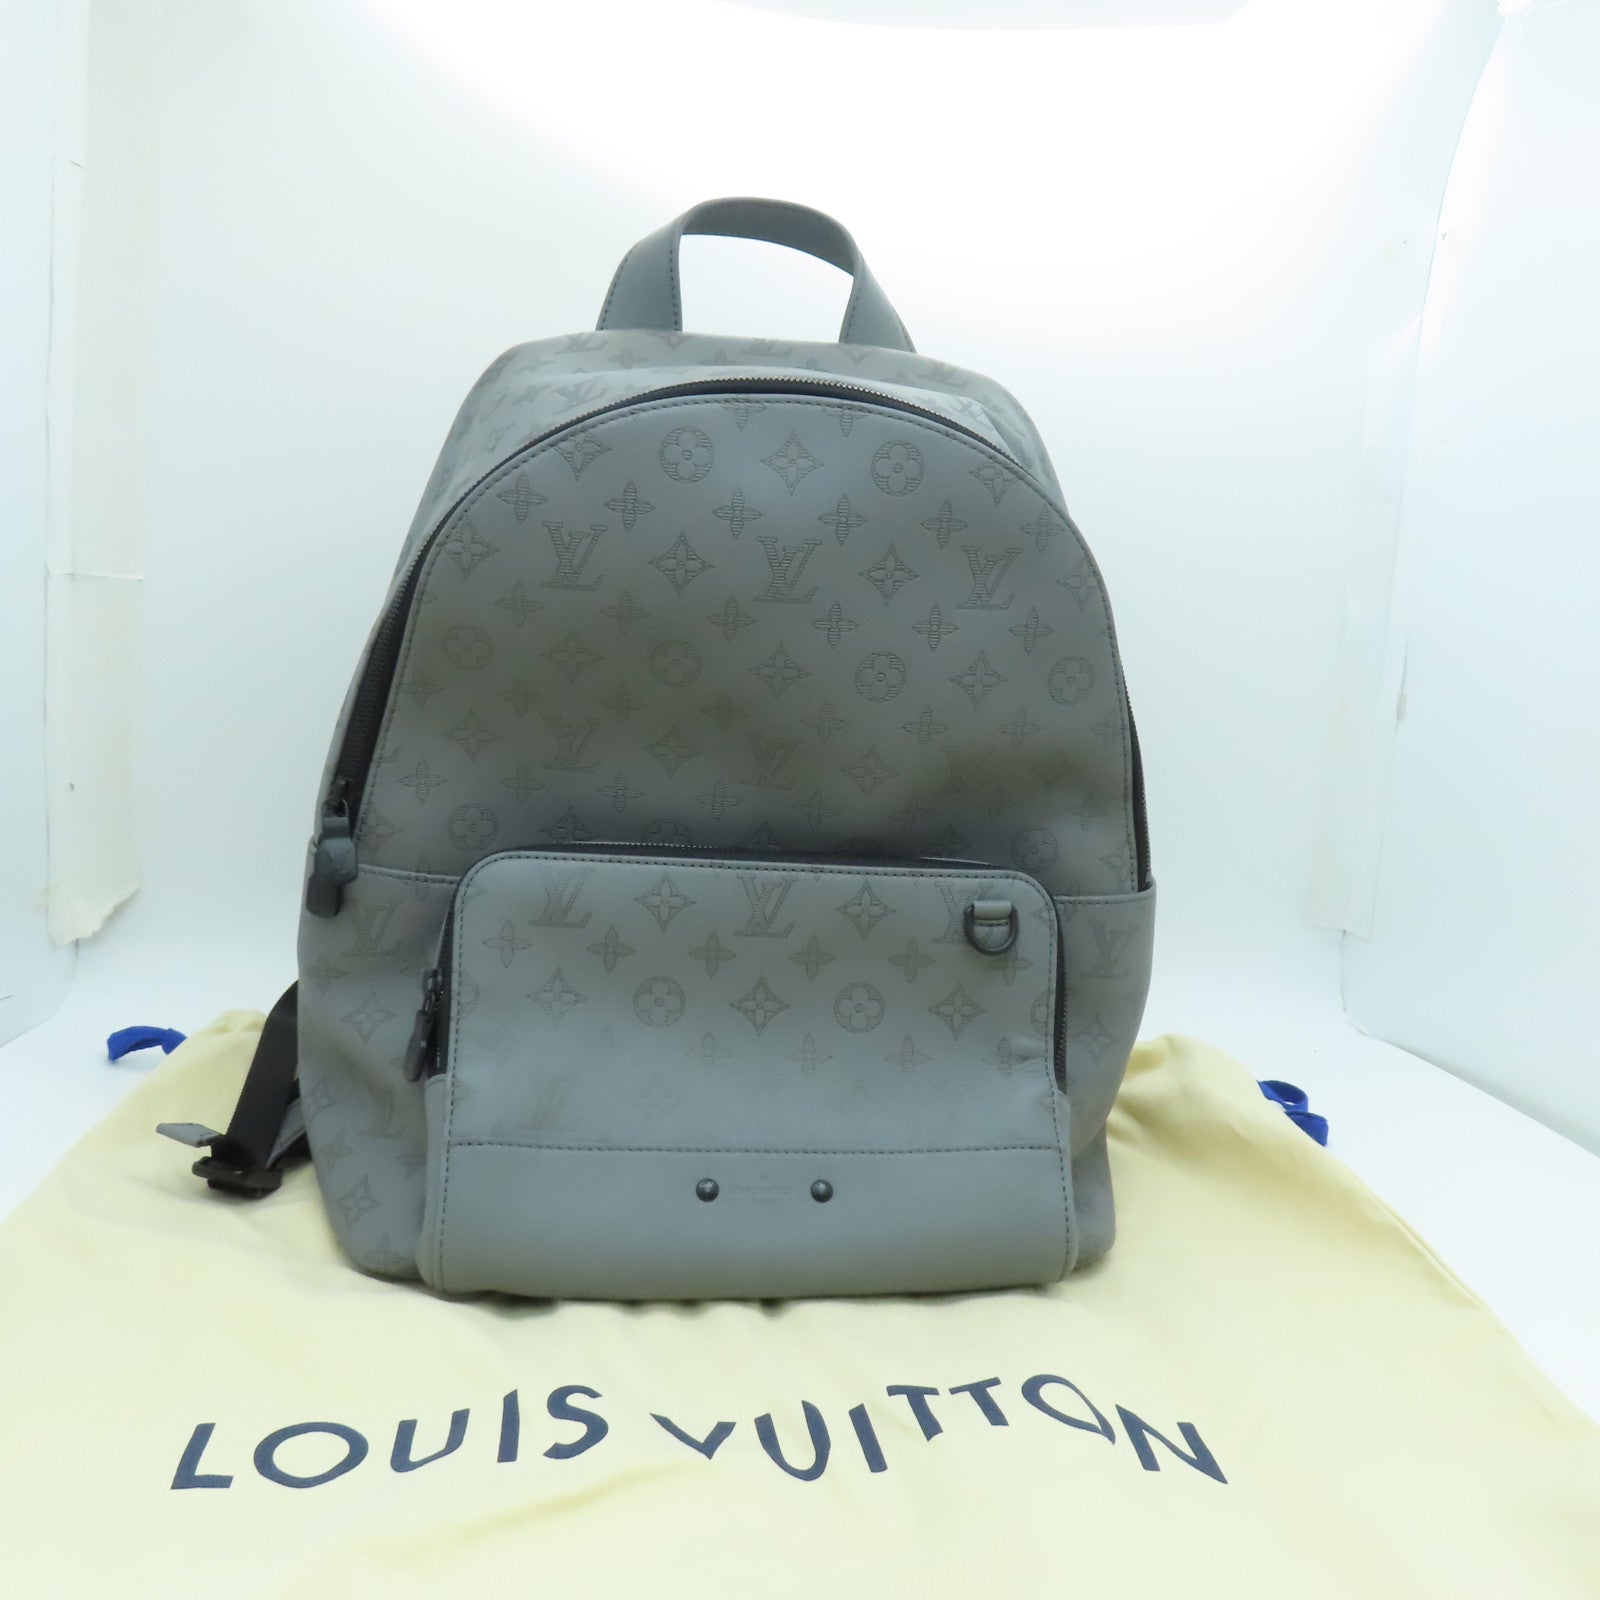 LOUIS VUITTON Monogram Shadow Racer Backpack backpack gray